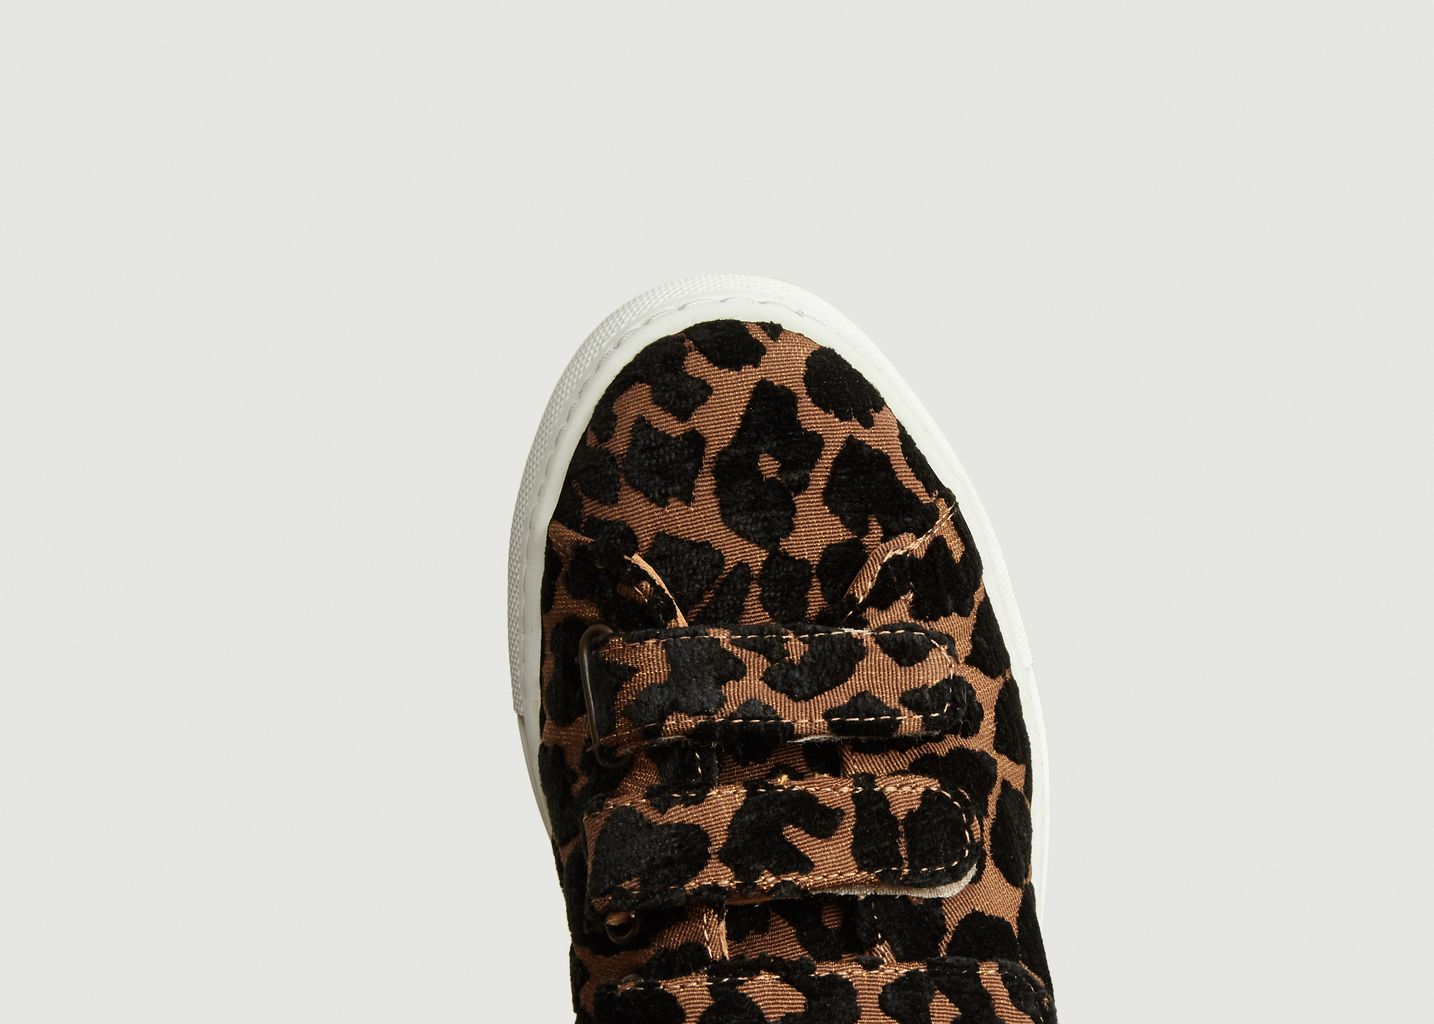 Leopard Touch Strap Sneaker - Le Lissier